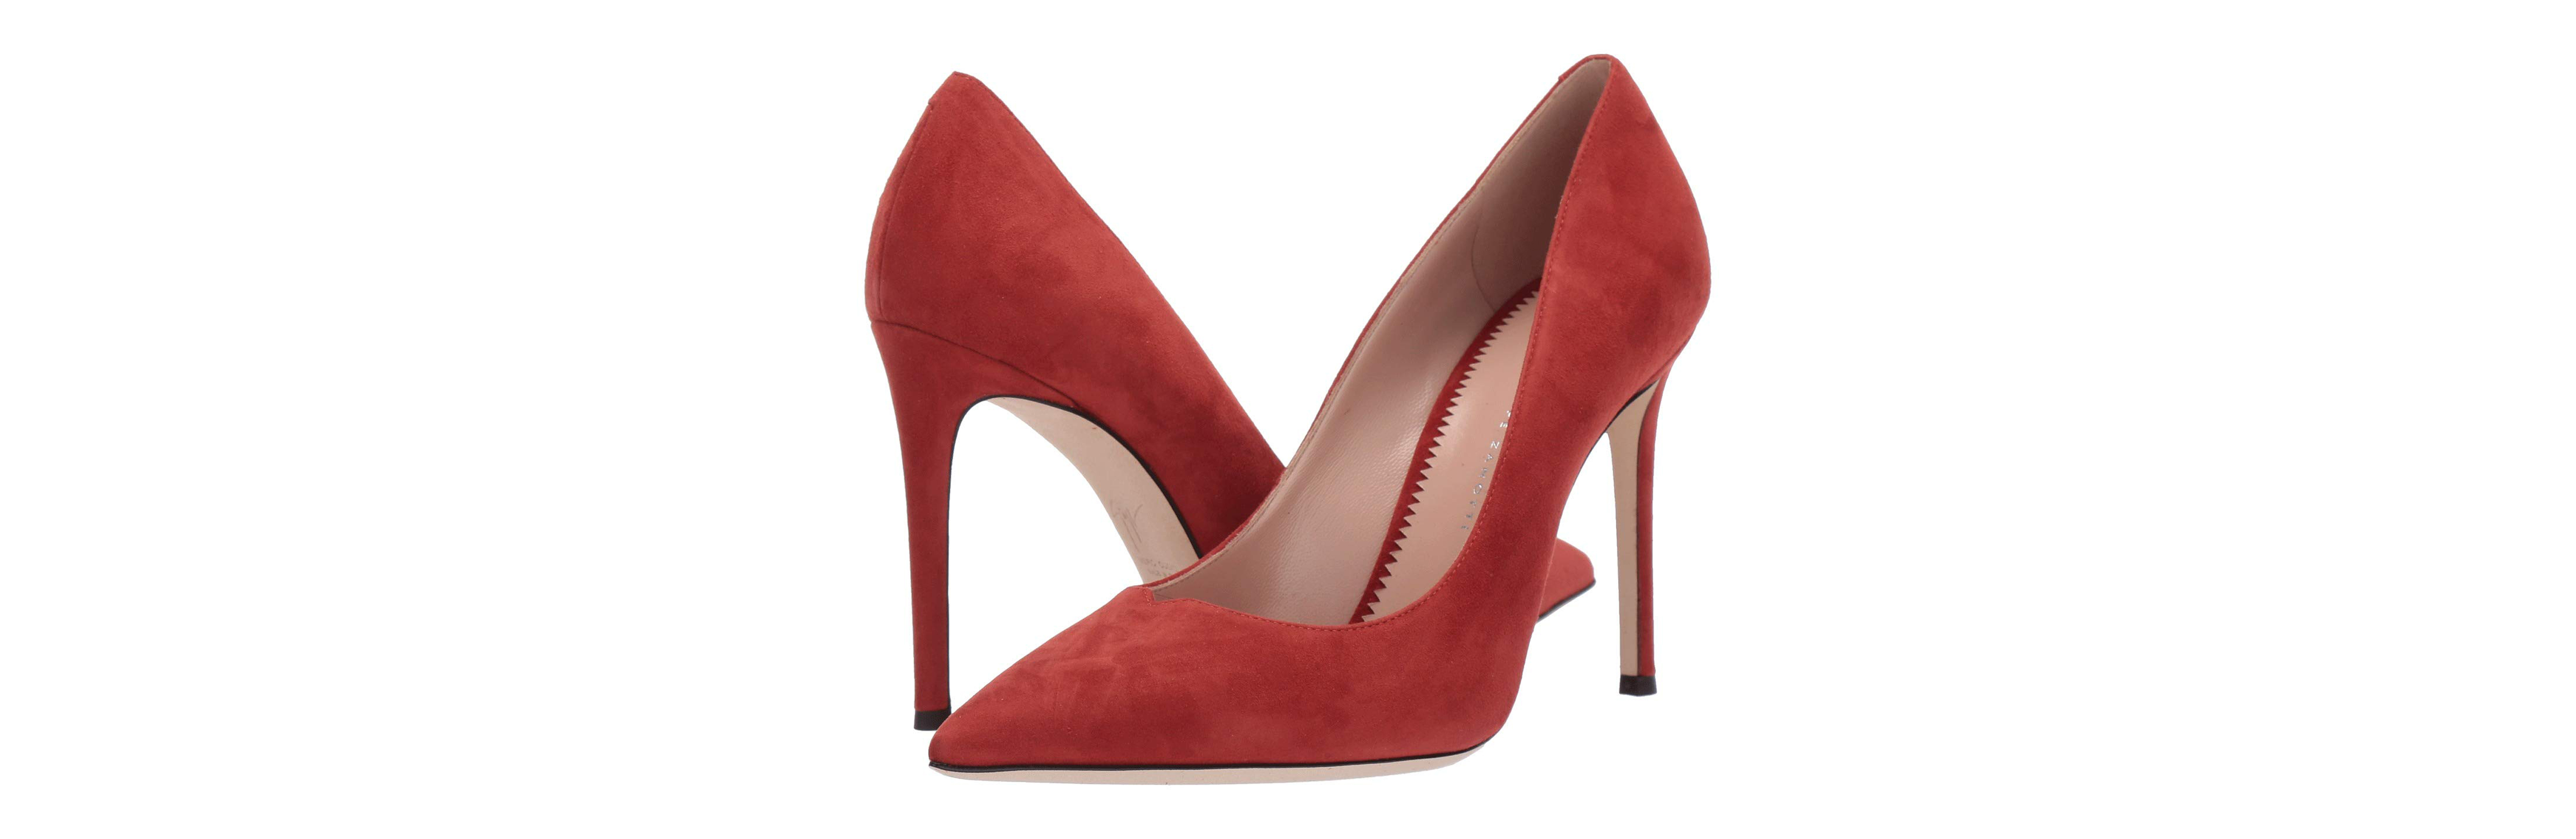 Giuseppe Zanotti red heels